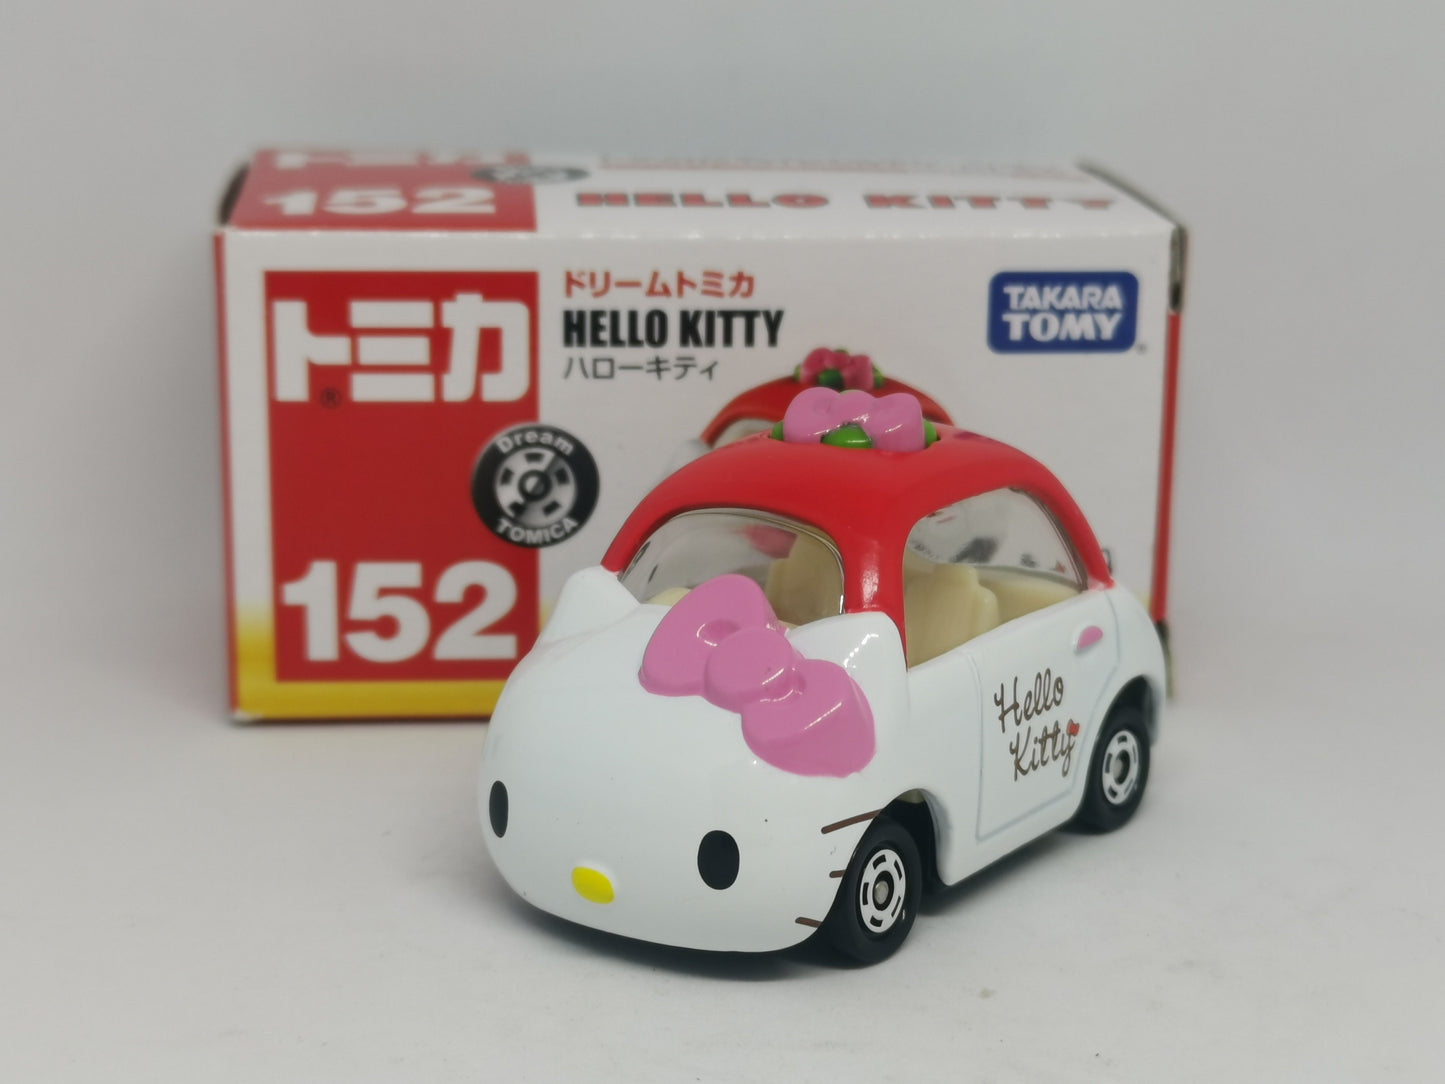 2012 Dream Tomica #152 Hello Kitty Takara Tomy